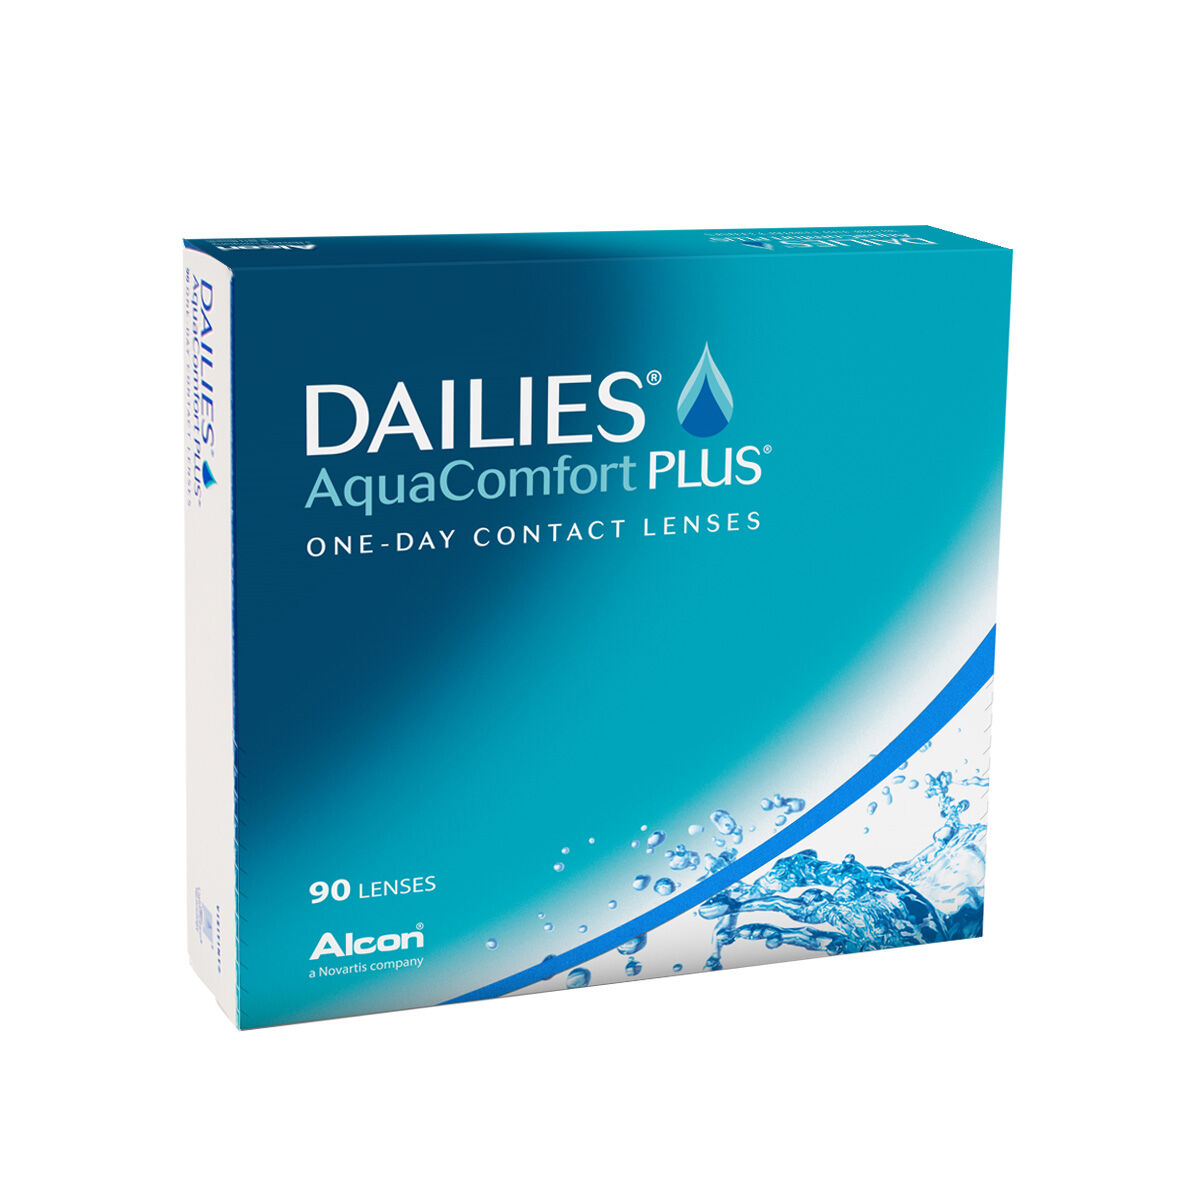 Alcon Dailies Aqua Comfort Plus (90 Contact Lenses), CIBA Vision/Alcon, Daily Disposable, Nelfilcon A